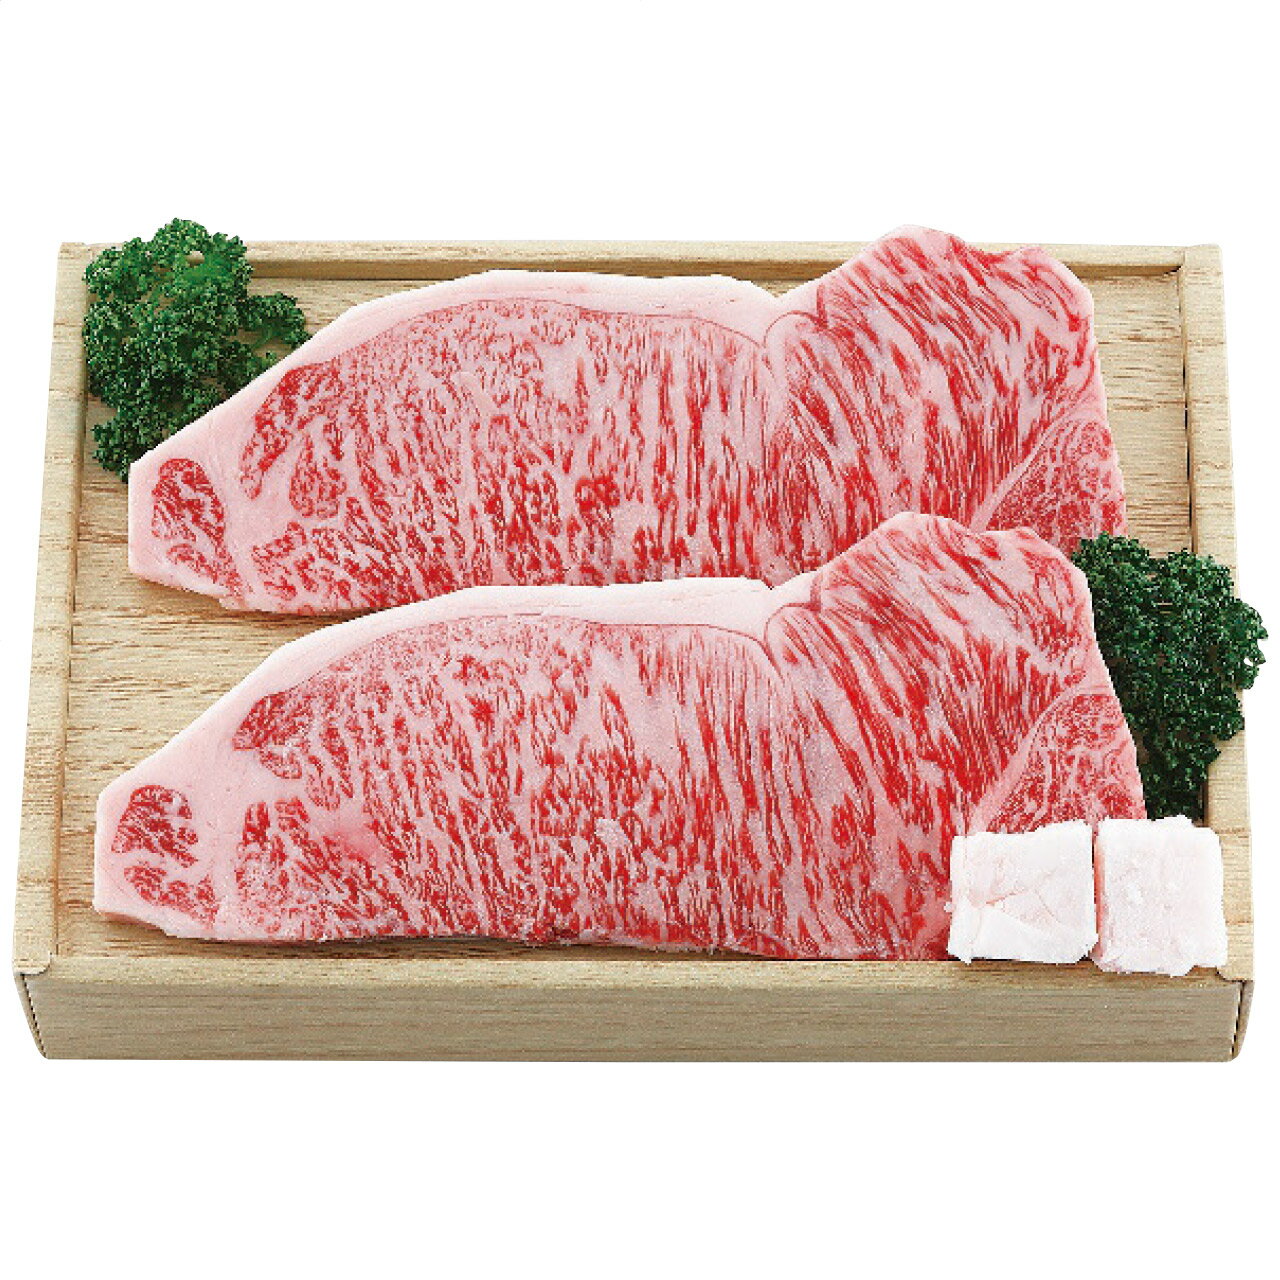 【産地直送】 杉本食肉産業 飛騨牛 飛騨牛サーロインステーキ用 2枚 2270-039